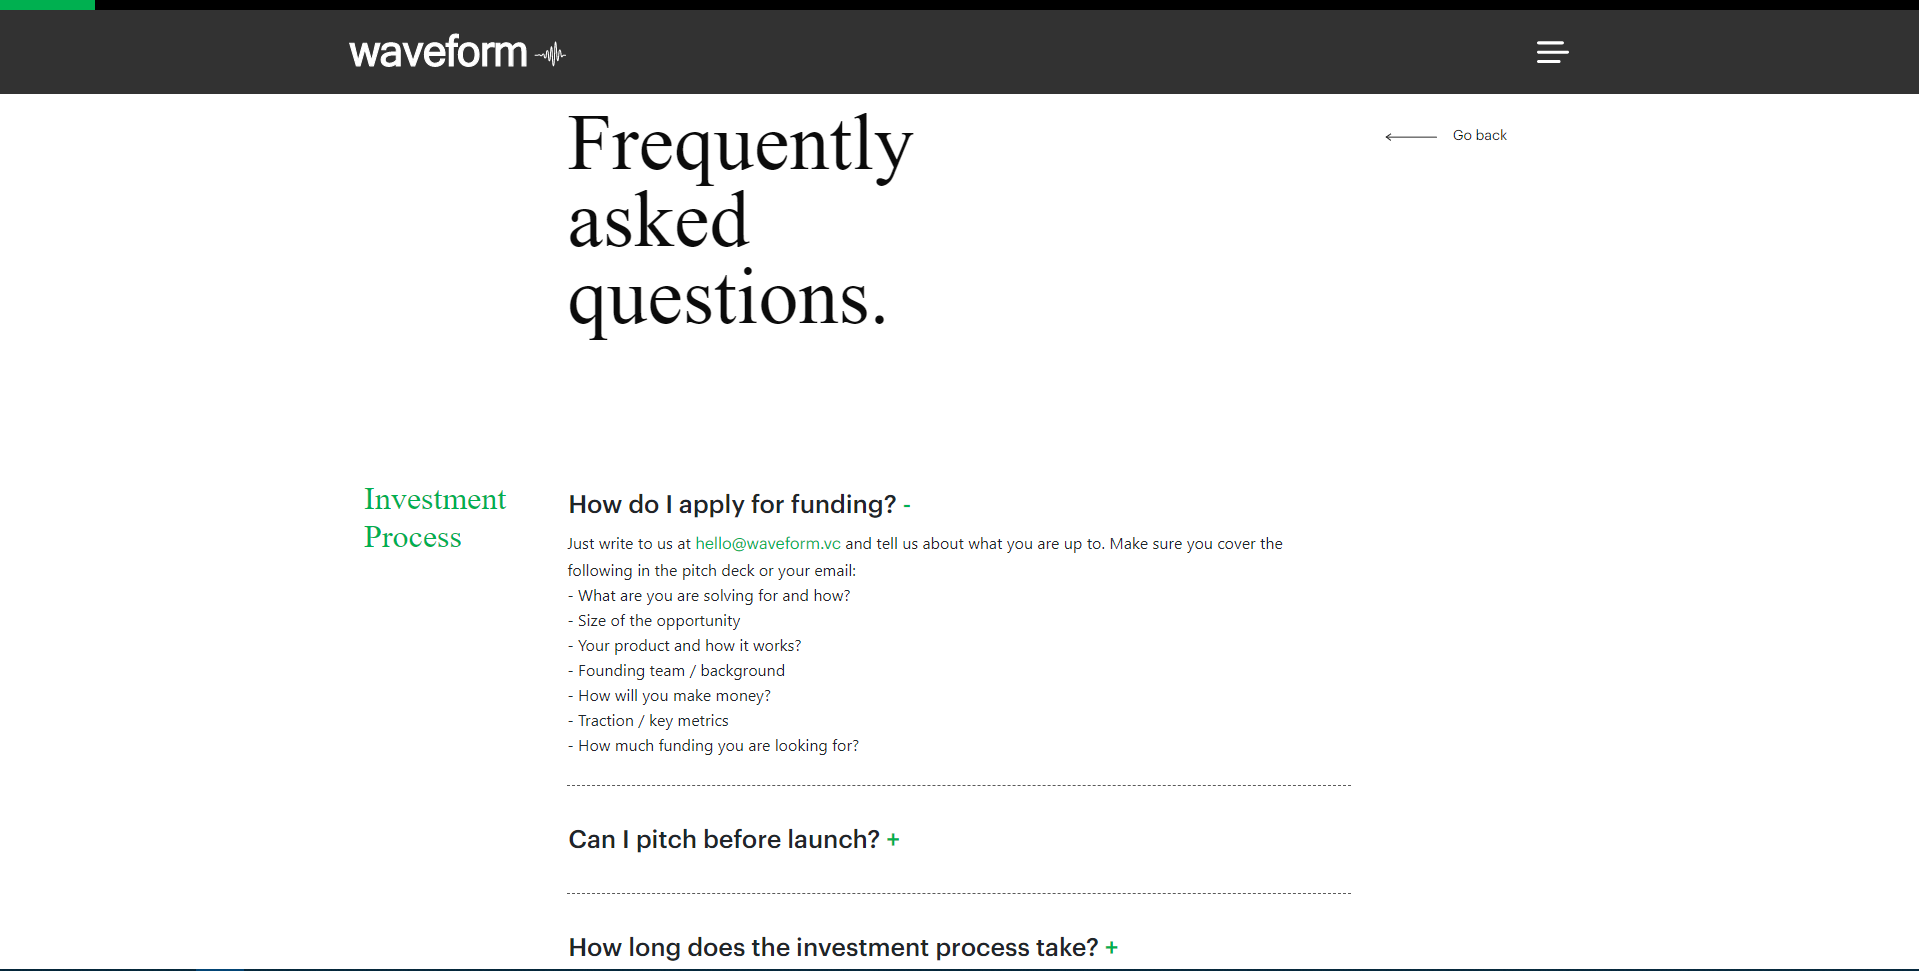 waveform FAQ screenshot